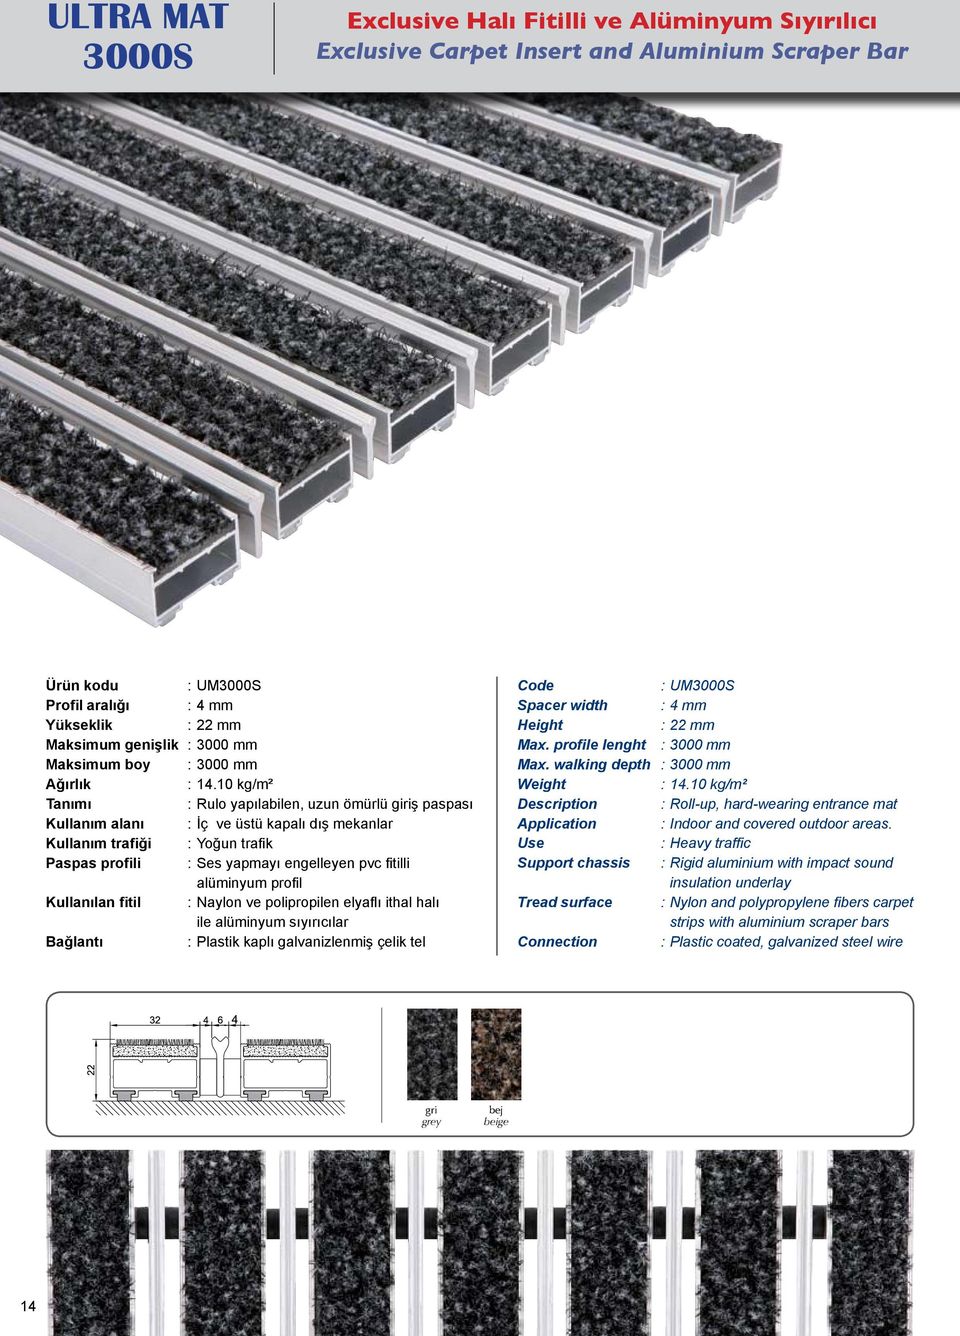 Plastik kaplı galvanizlenmiş çelik tel : UM3000S Spacer width : 4 mm Max. profile lenght : 3000 mm Max. walking depth : 3000 mm : 14.